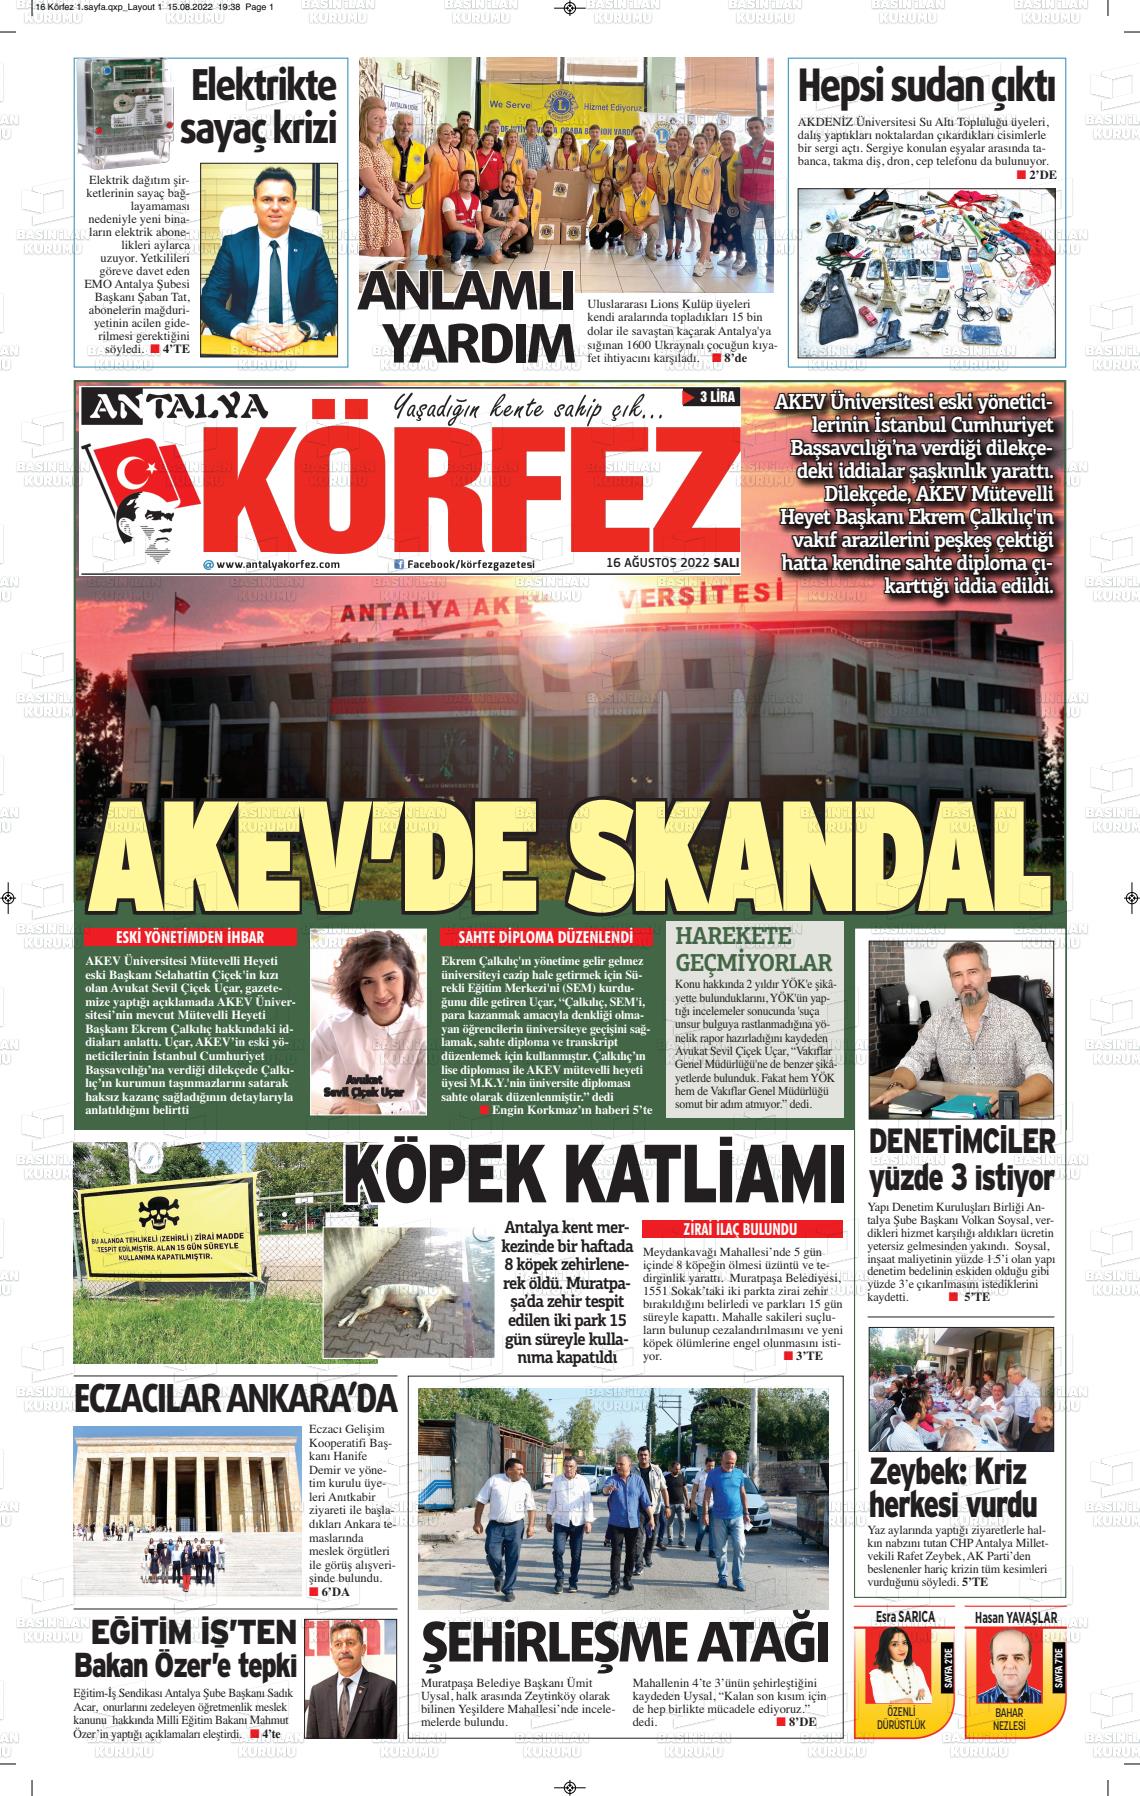 16 Ağustos 2022 Antalya Körfez Gazete Manşeti